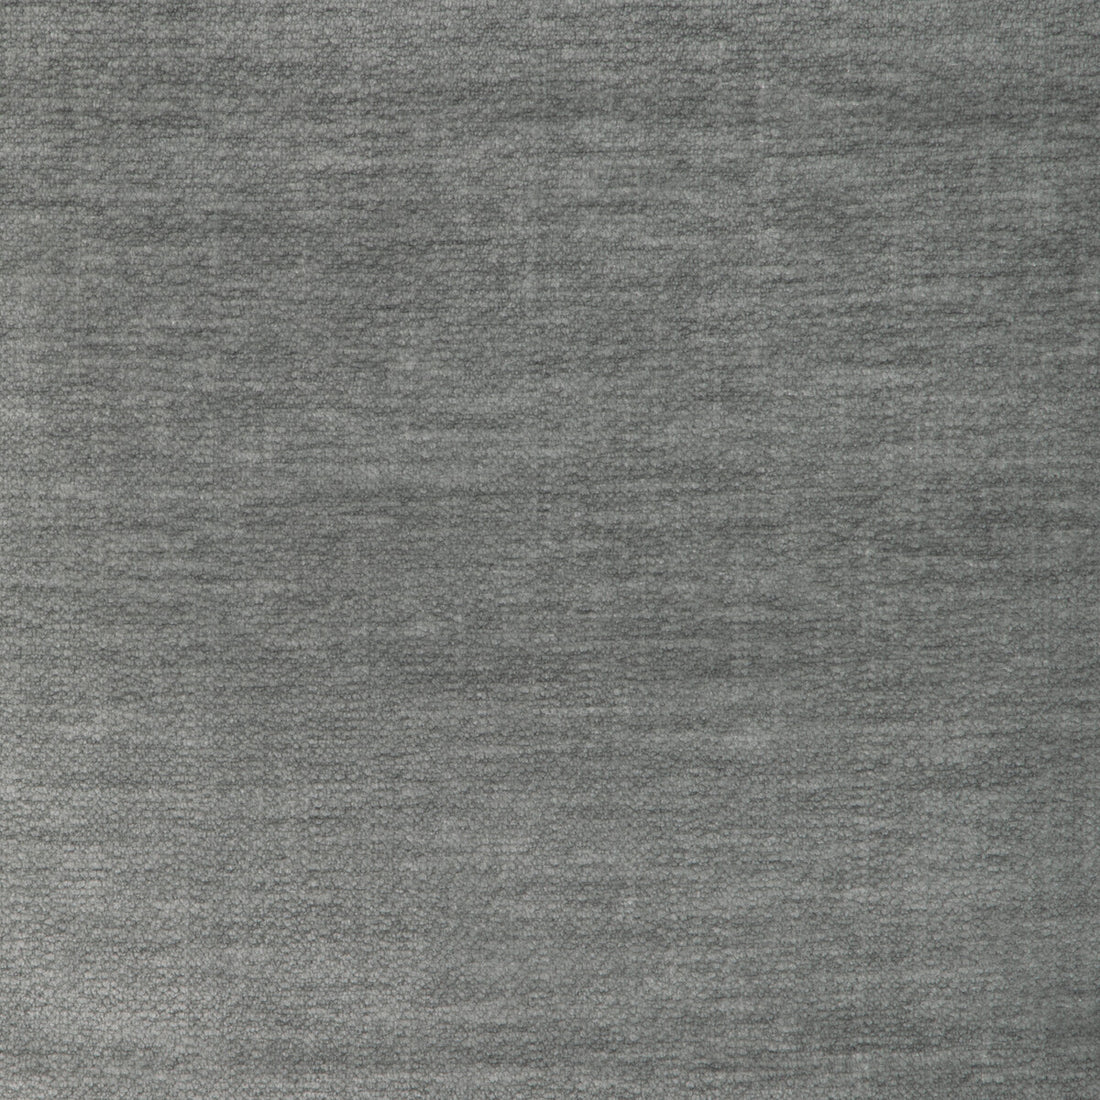 Kravet Smart fabric in 36675-52 color - pattern 36675.52.0 - by Kravet Smart in the Performance Kravetarmor collection